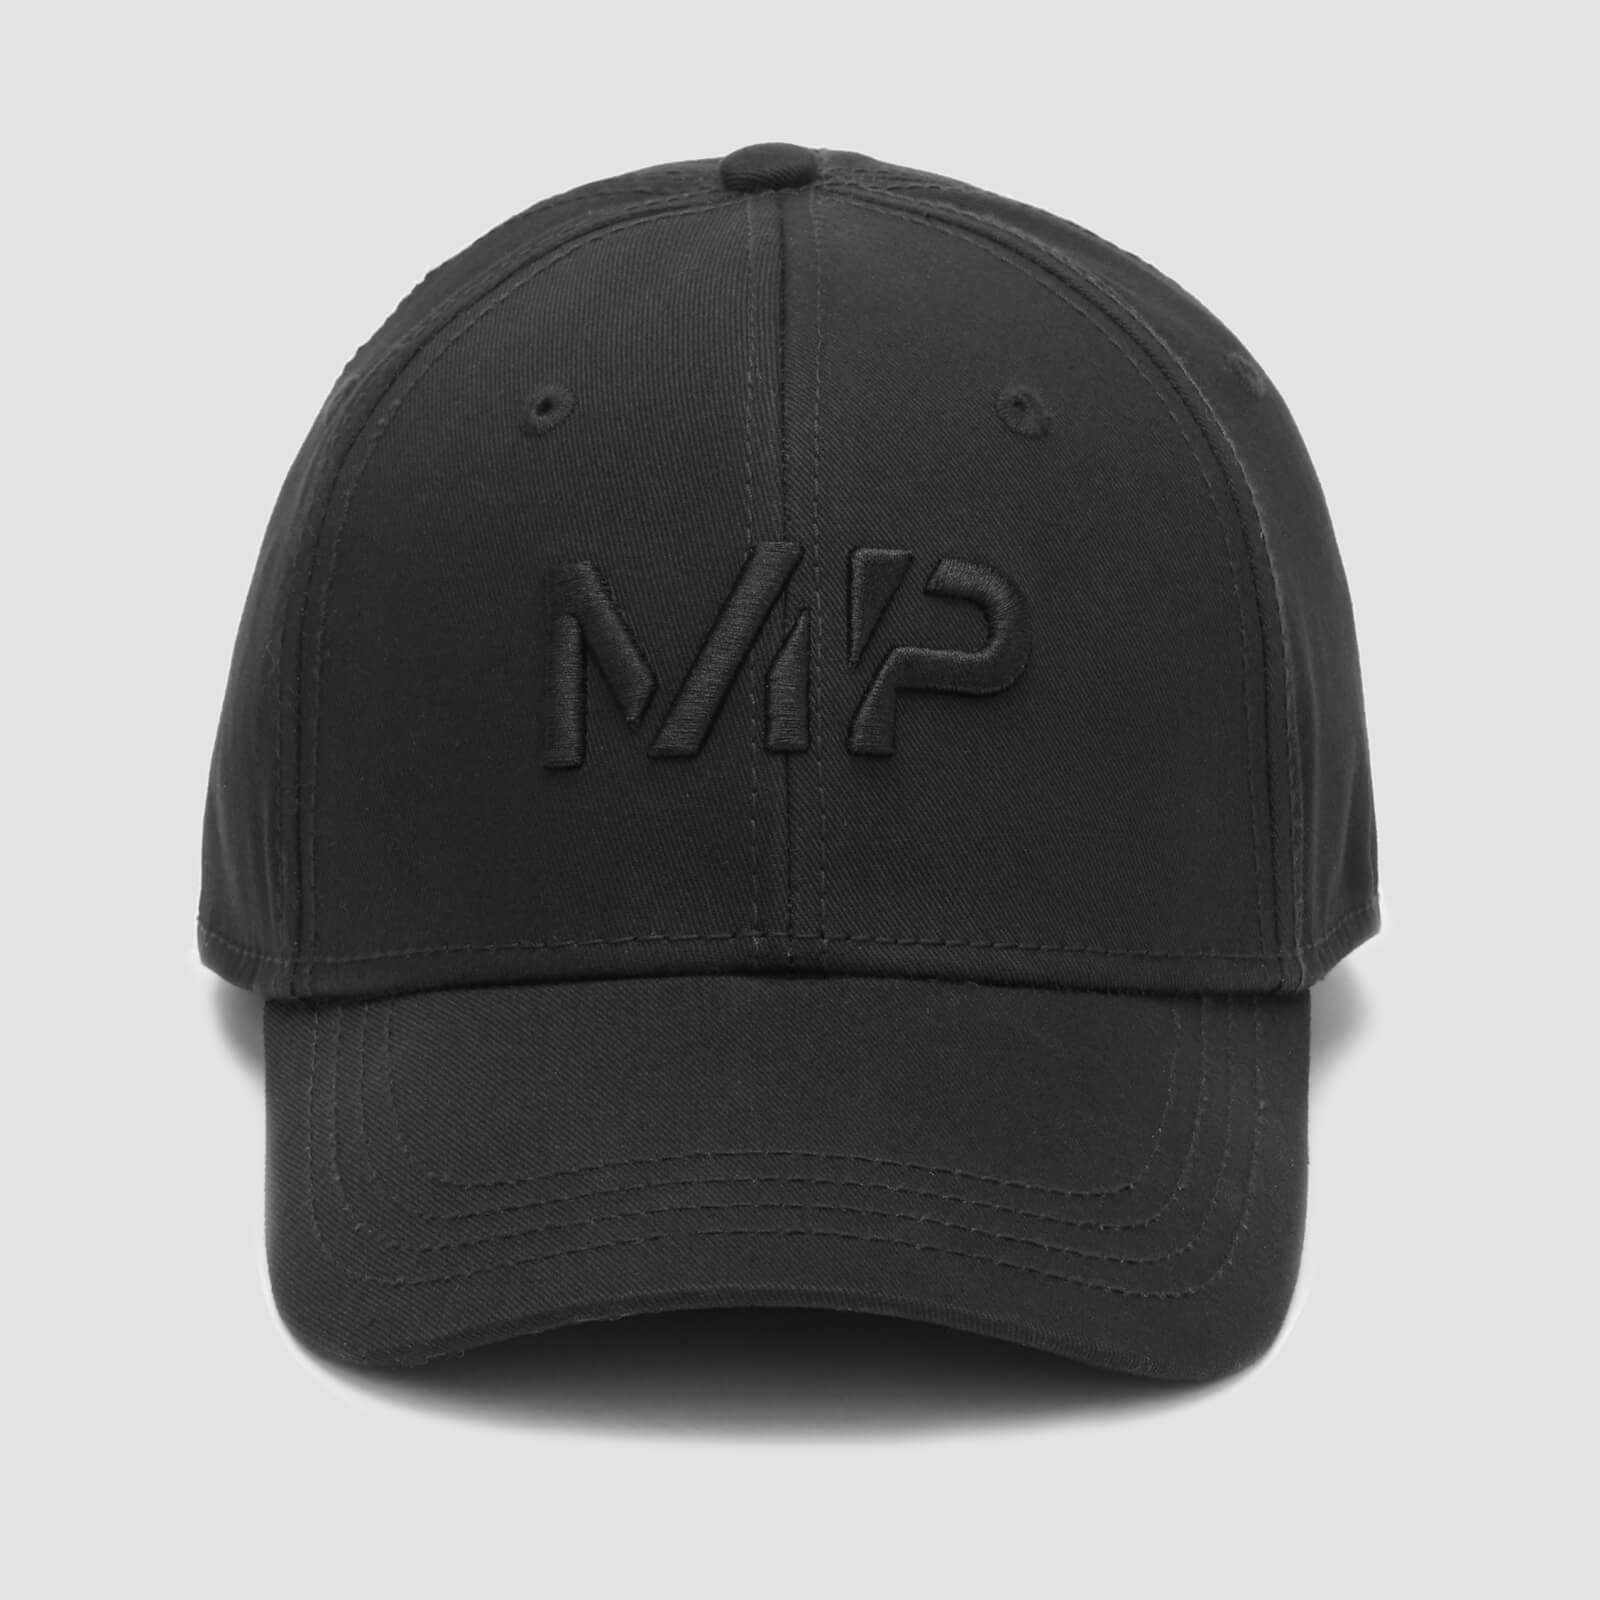 Myprotein Baseball Cap - Black